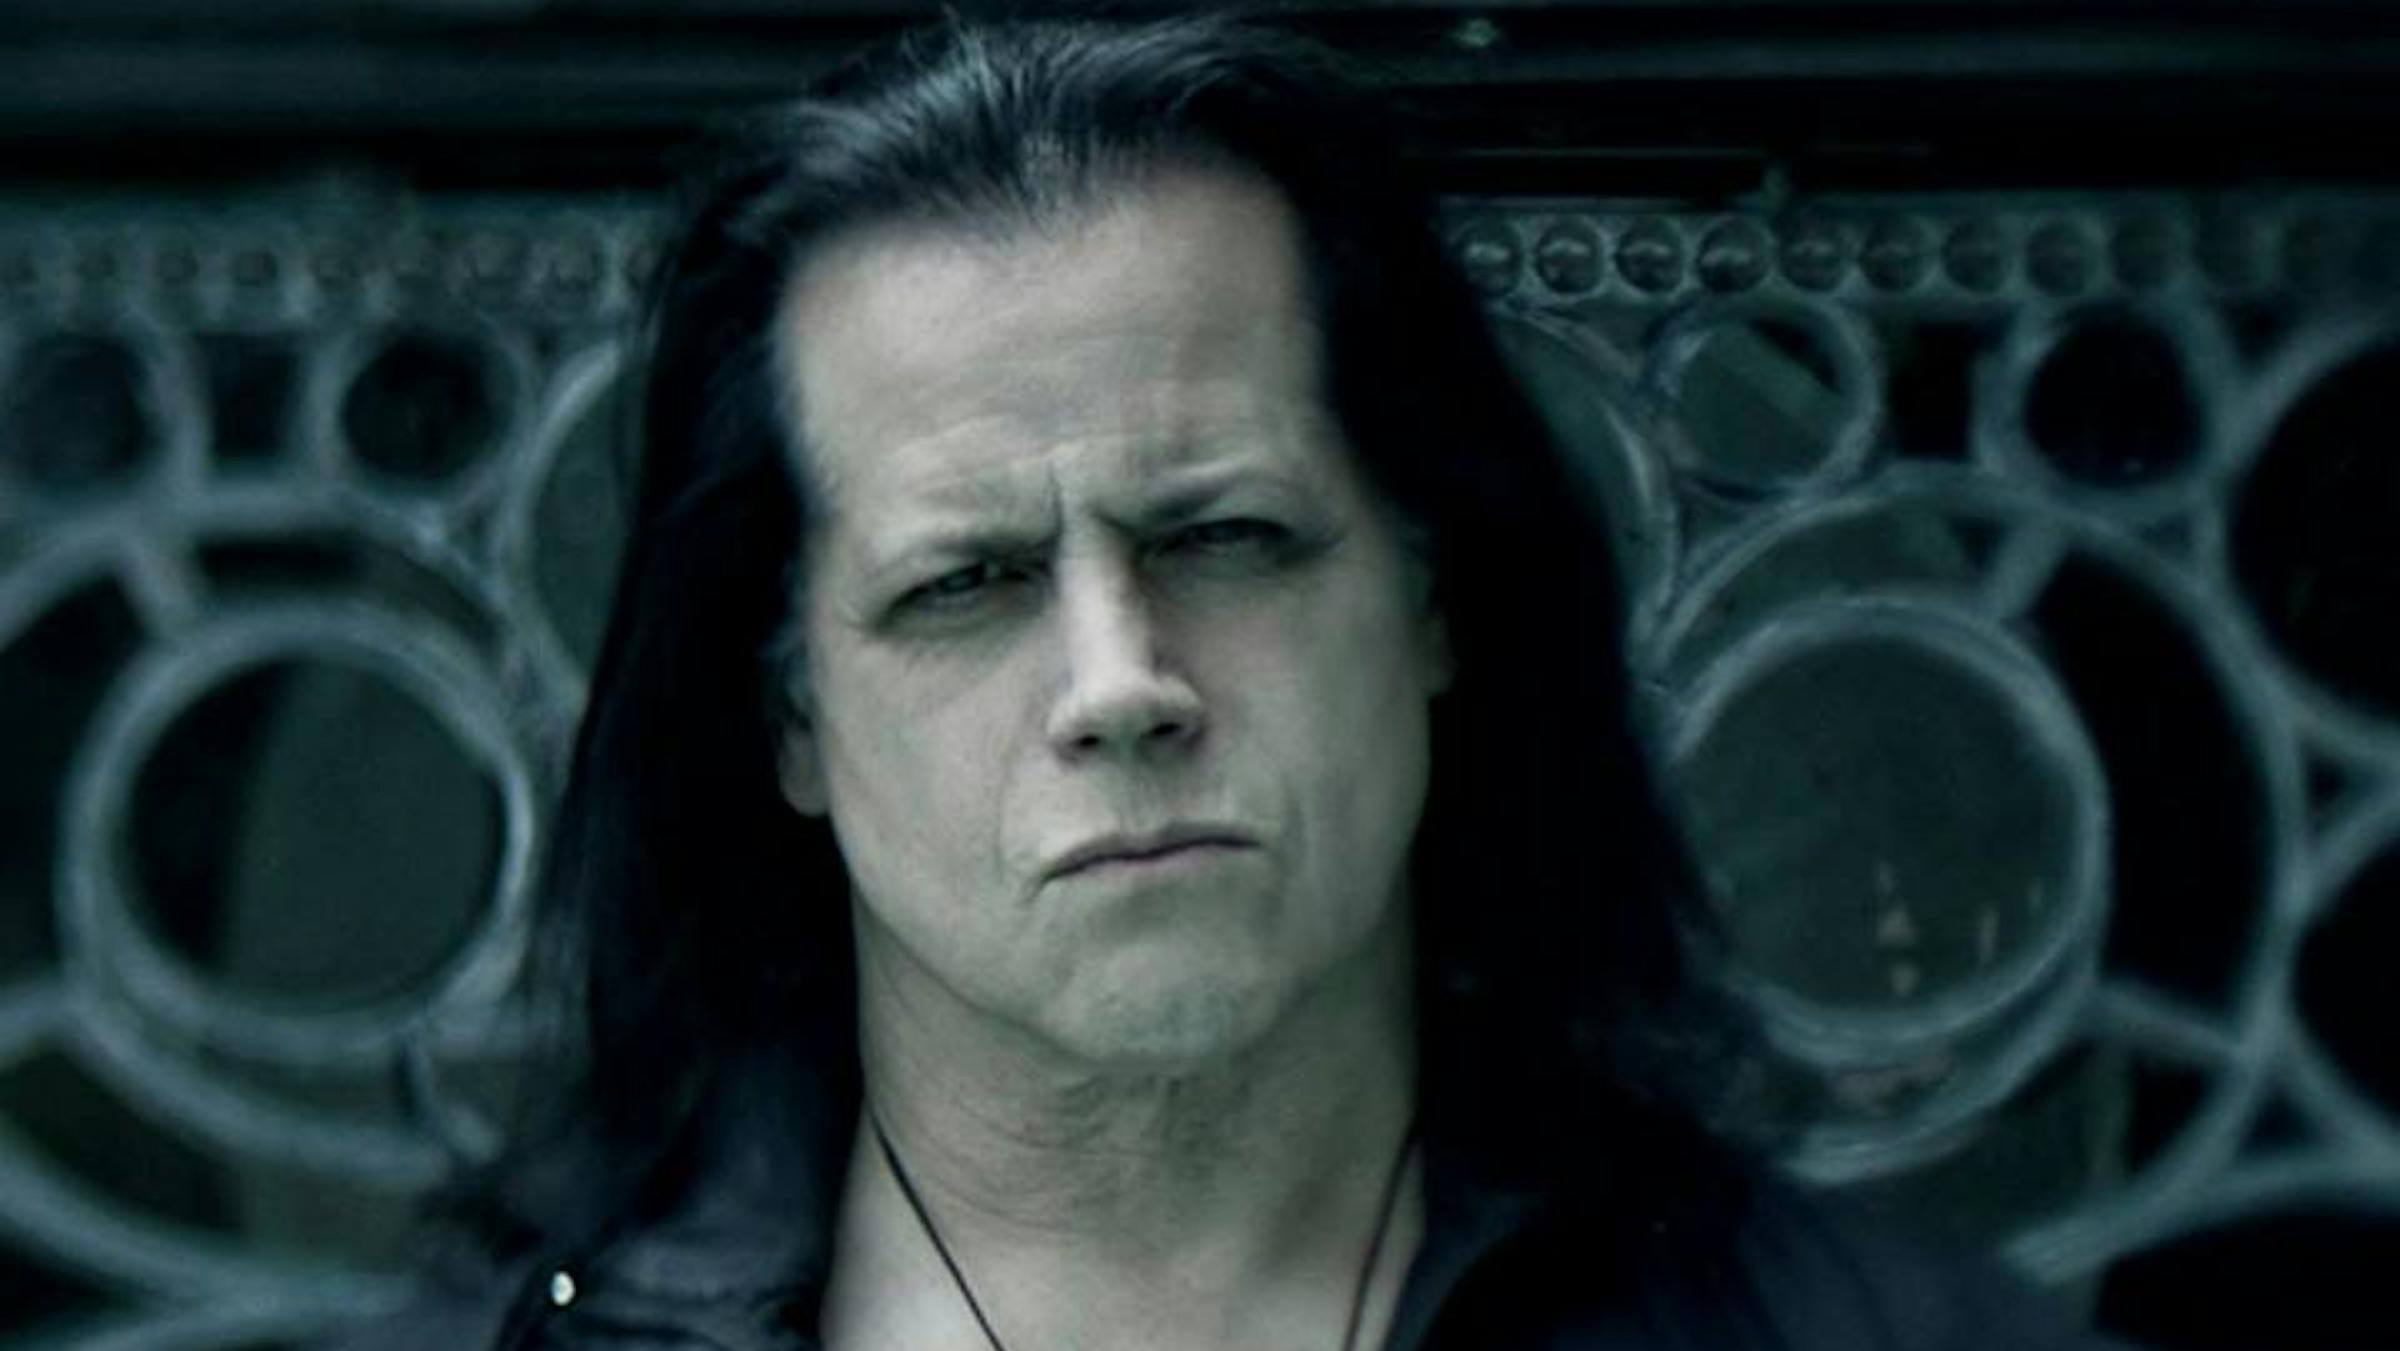 Danzig's "Instant Cult Classic" Horror Film Will Be Screening In LA Next Week